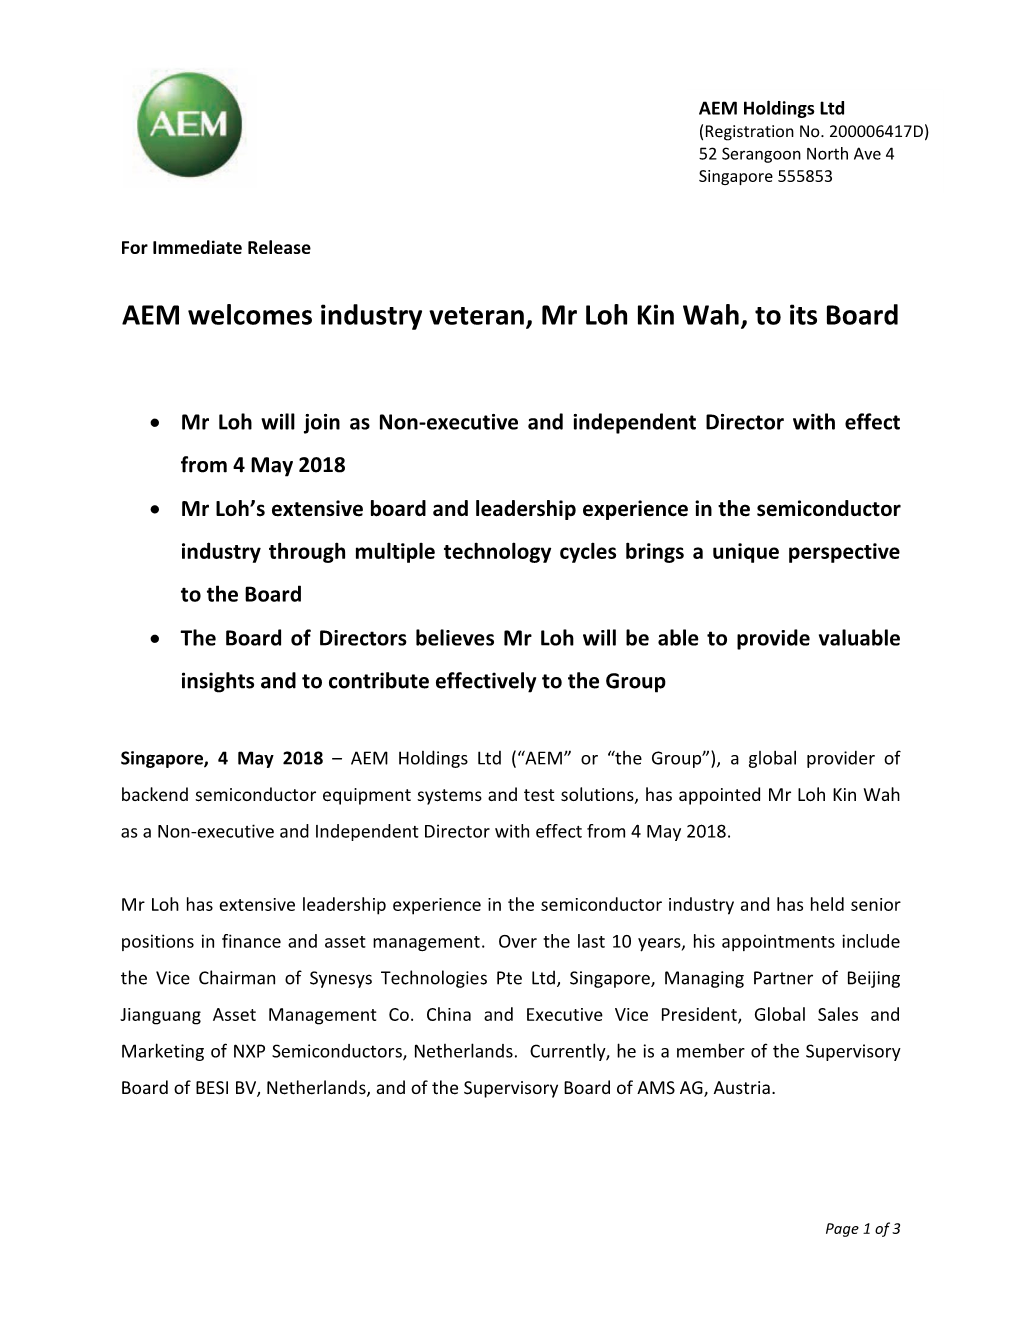 AEM Welcomes Industry Veteran, Mr Loh Kin Wah, to Its Board